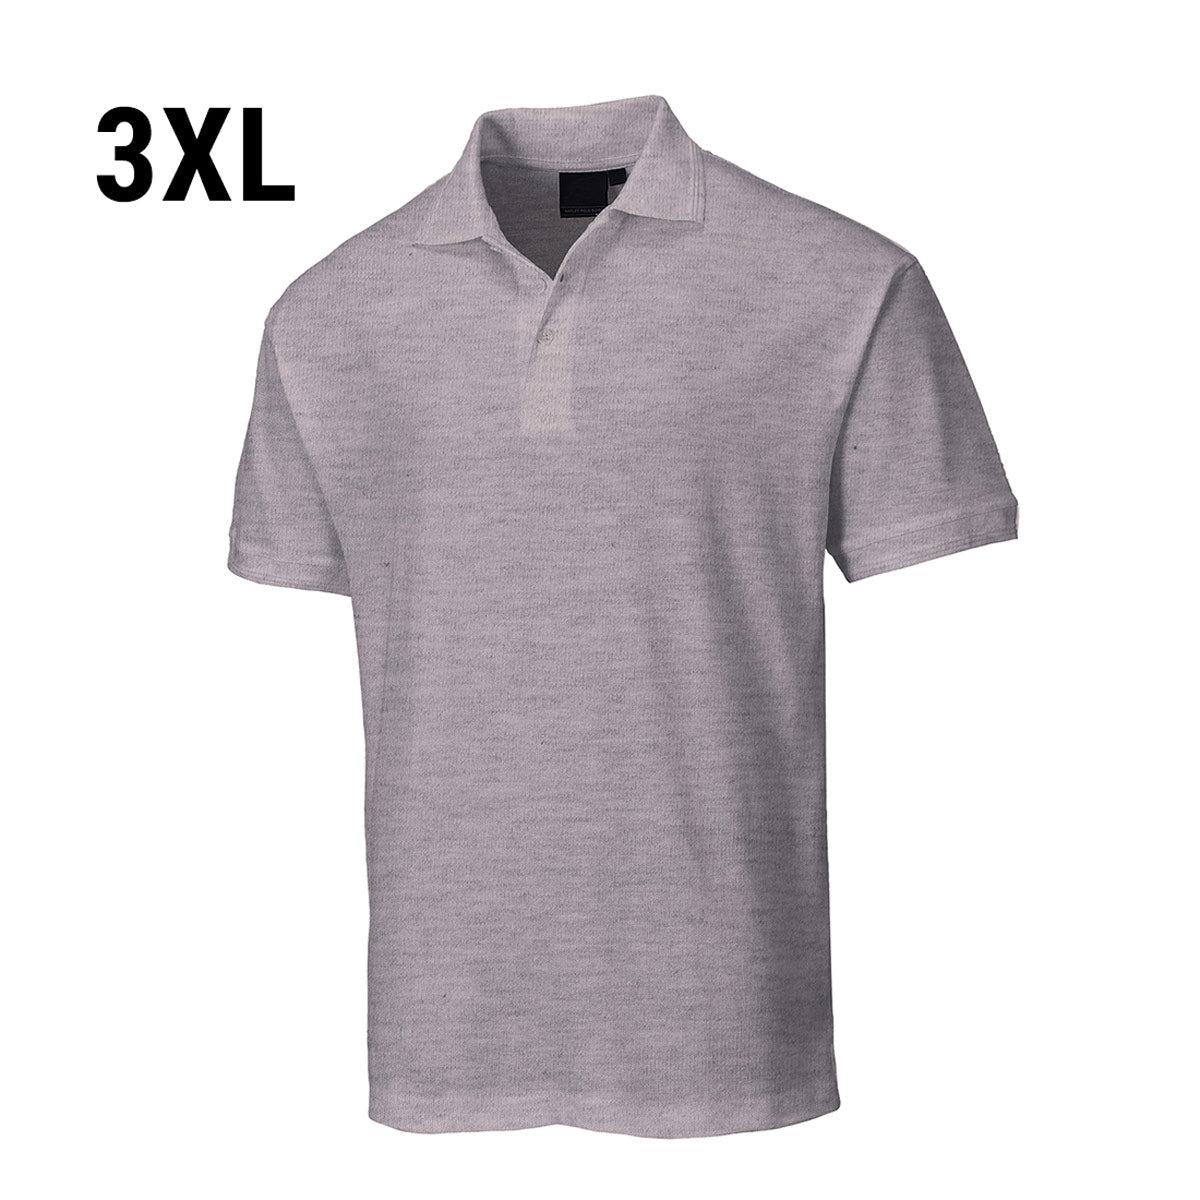 Polo shirt til mænd - Grå - Størrelse: 3XL